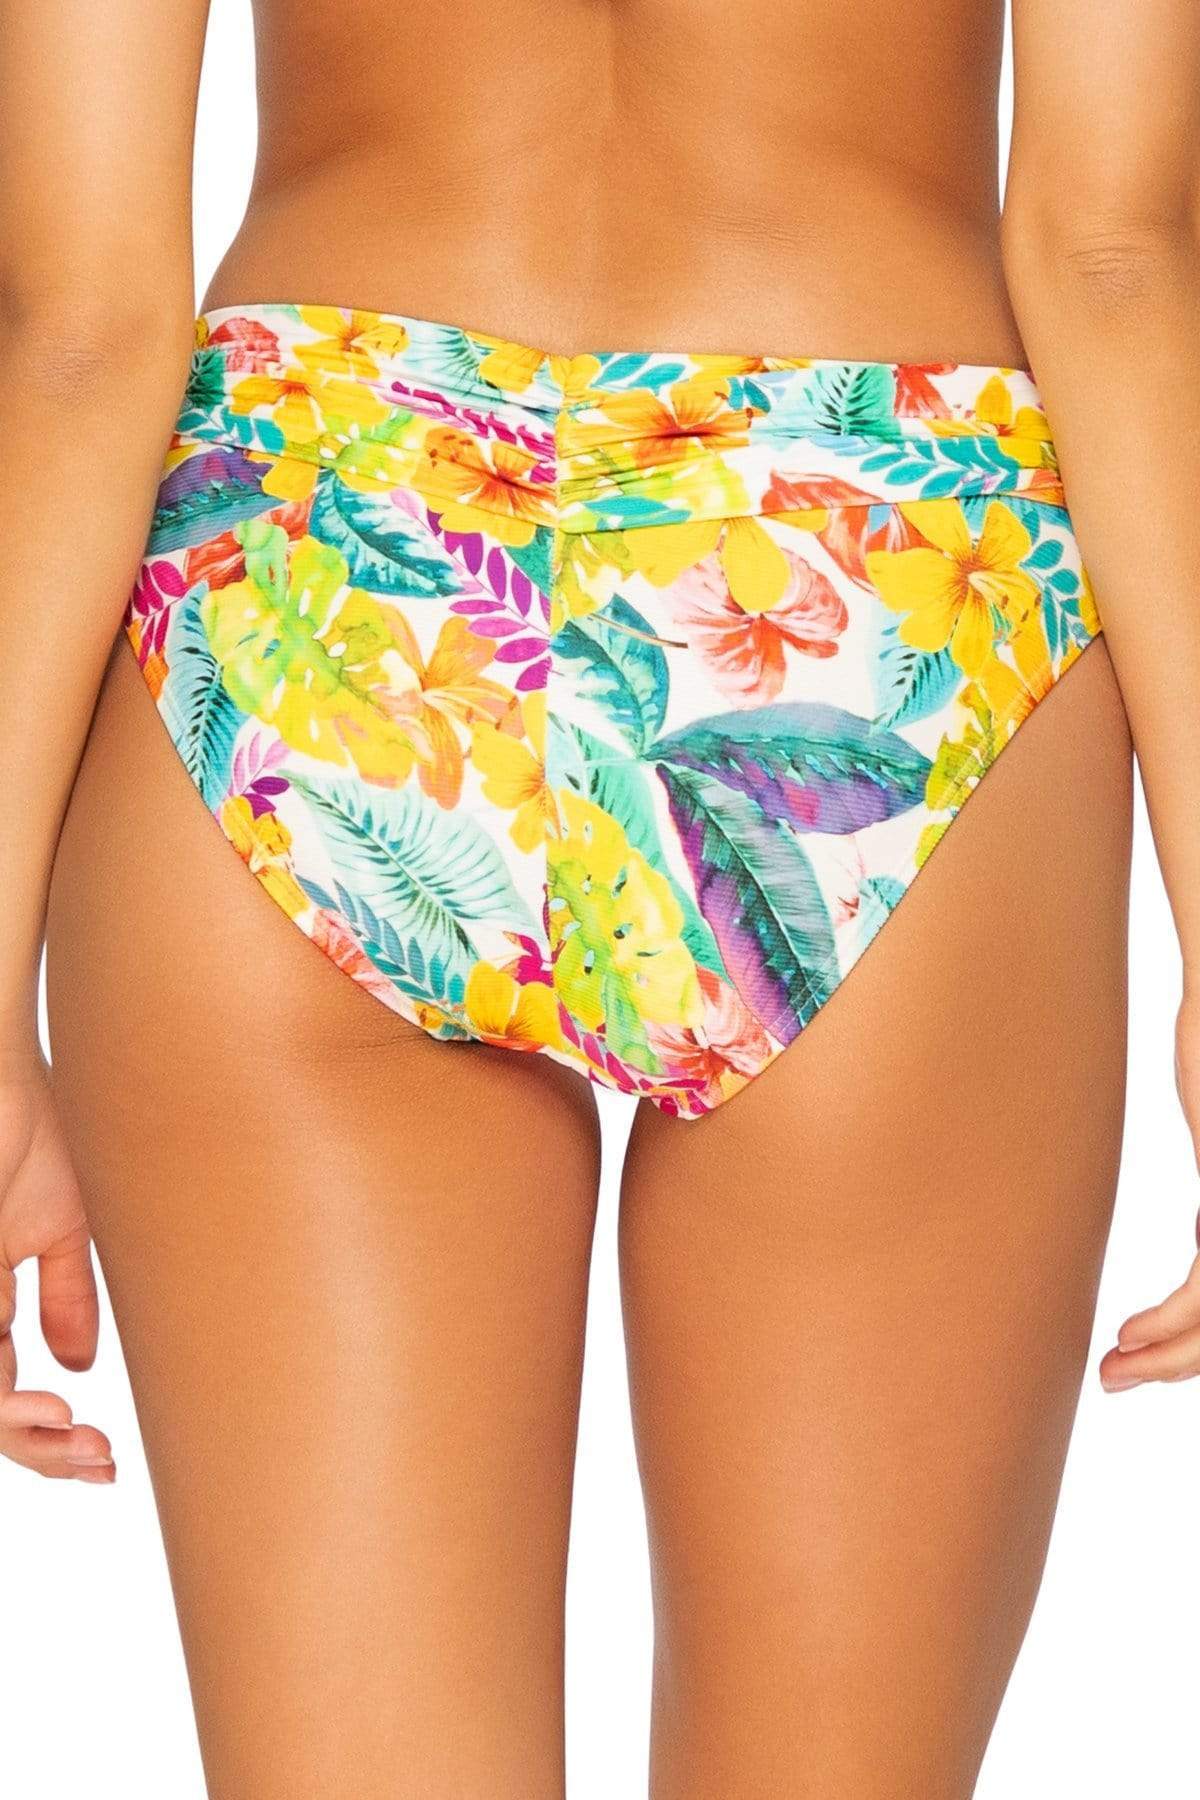 Bestswimwear -  Sunsets Tropical Adventure Unforgettable Bottom